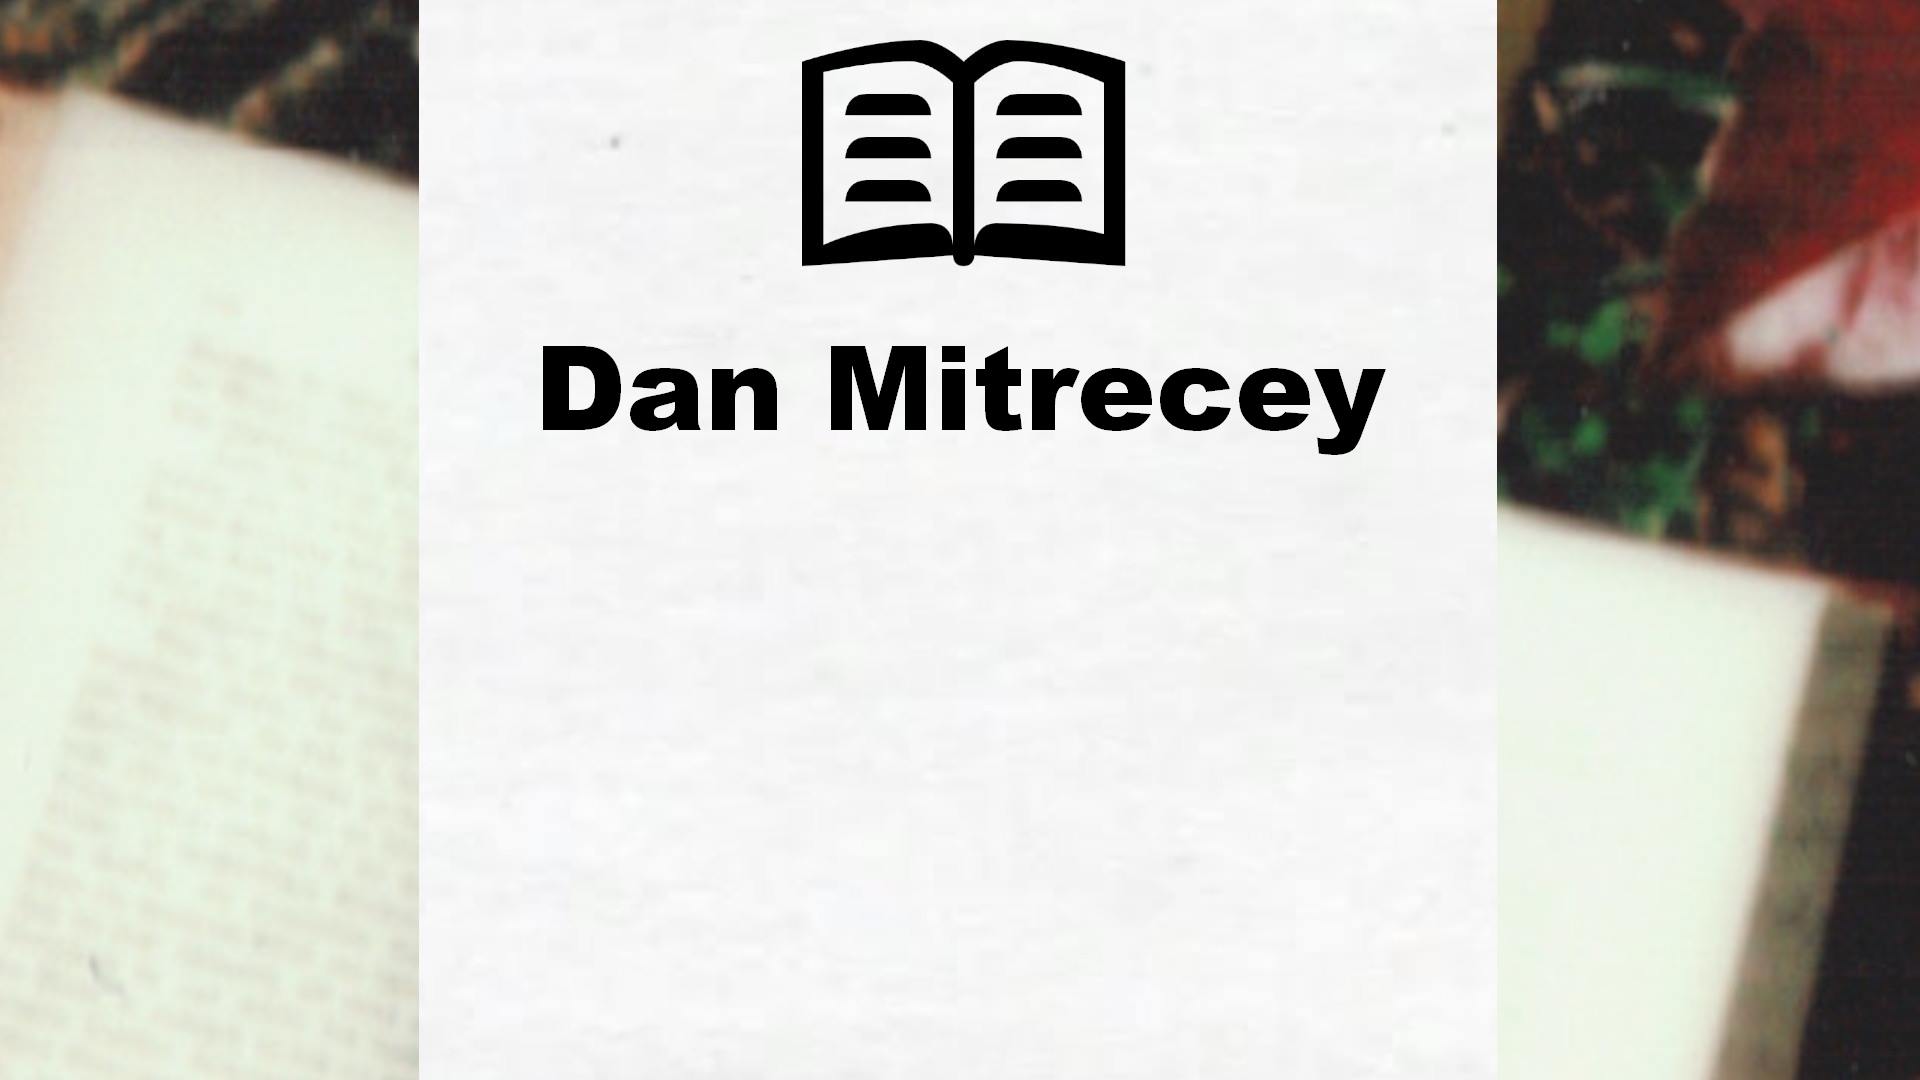 Le crayon magique - Livre de Dan Mitrecey